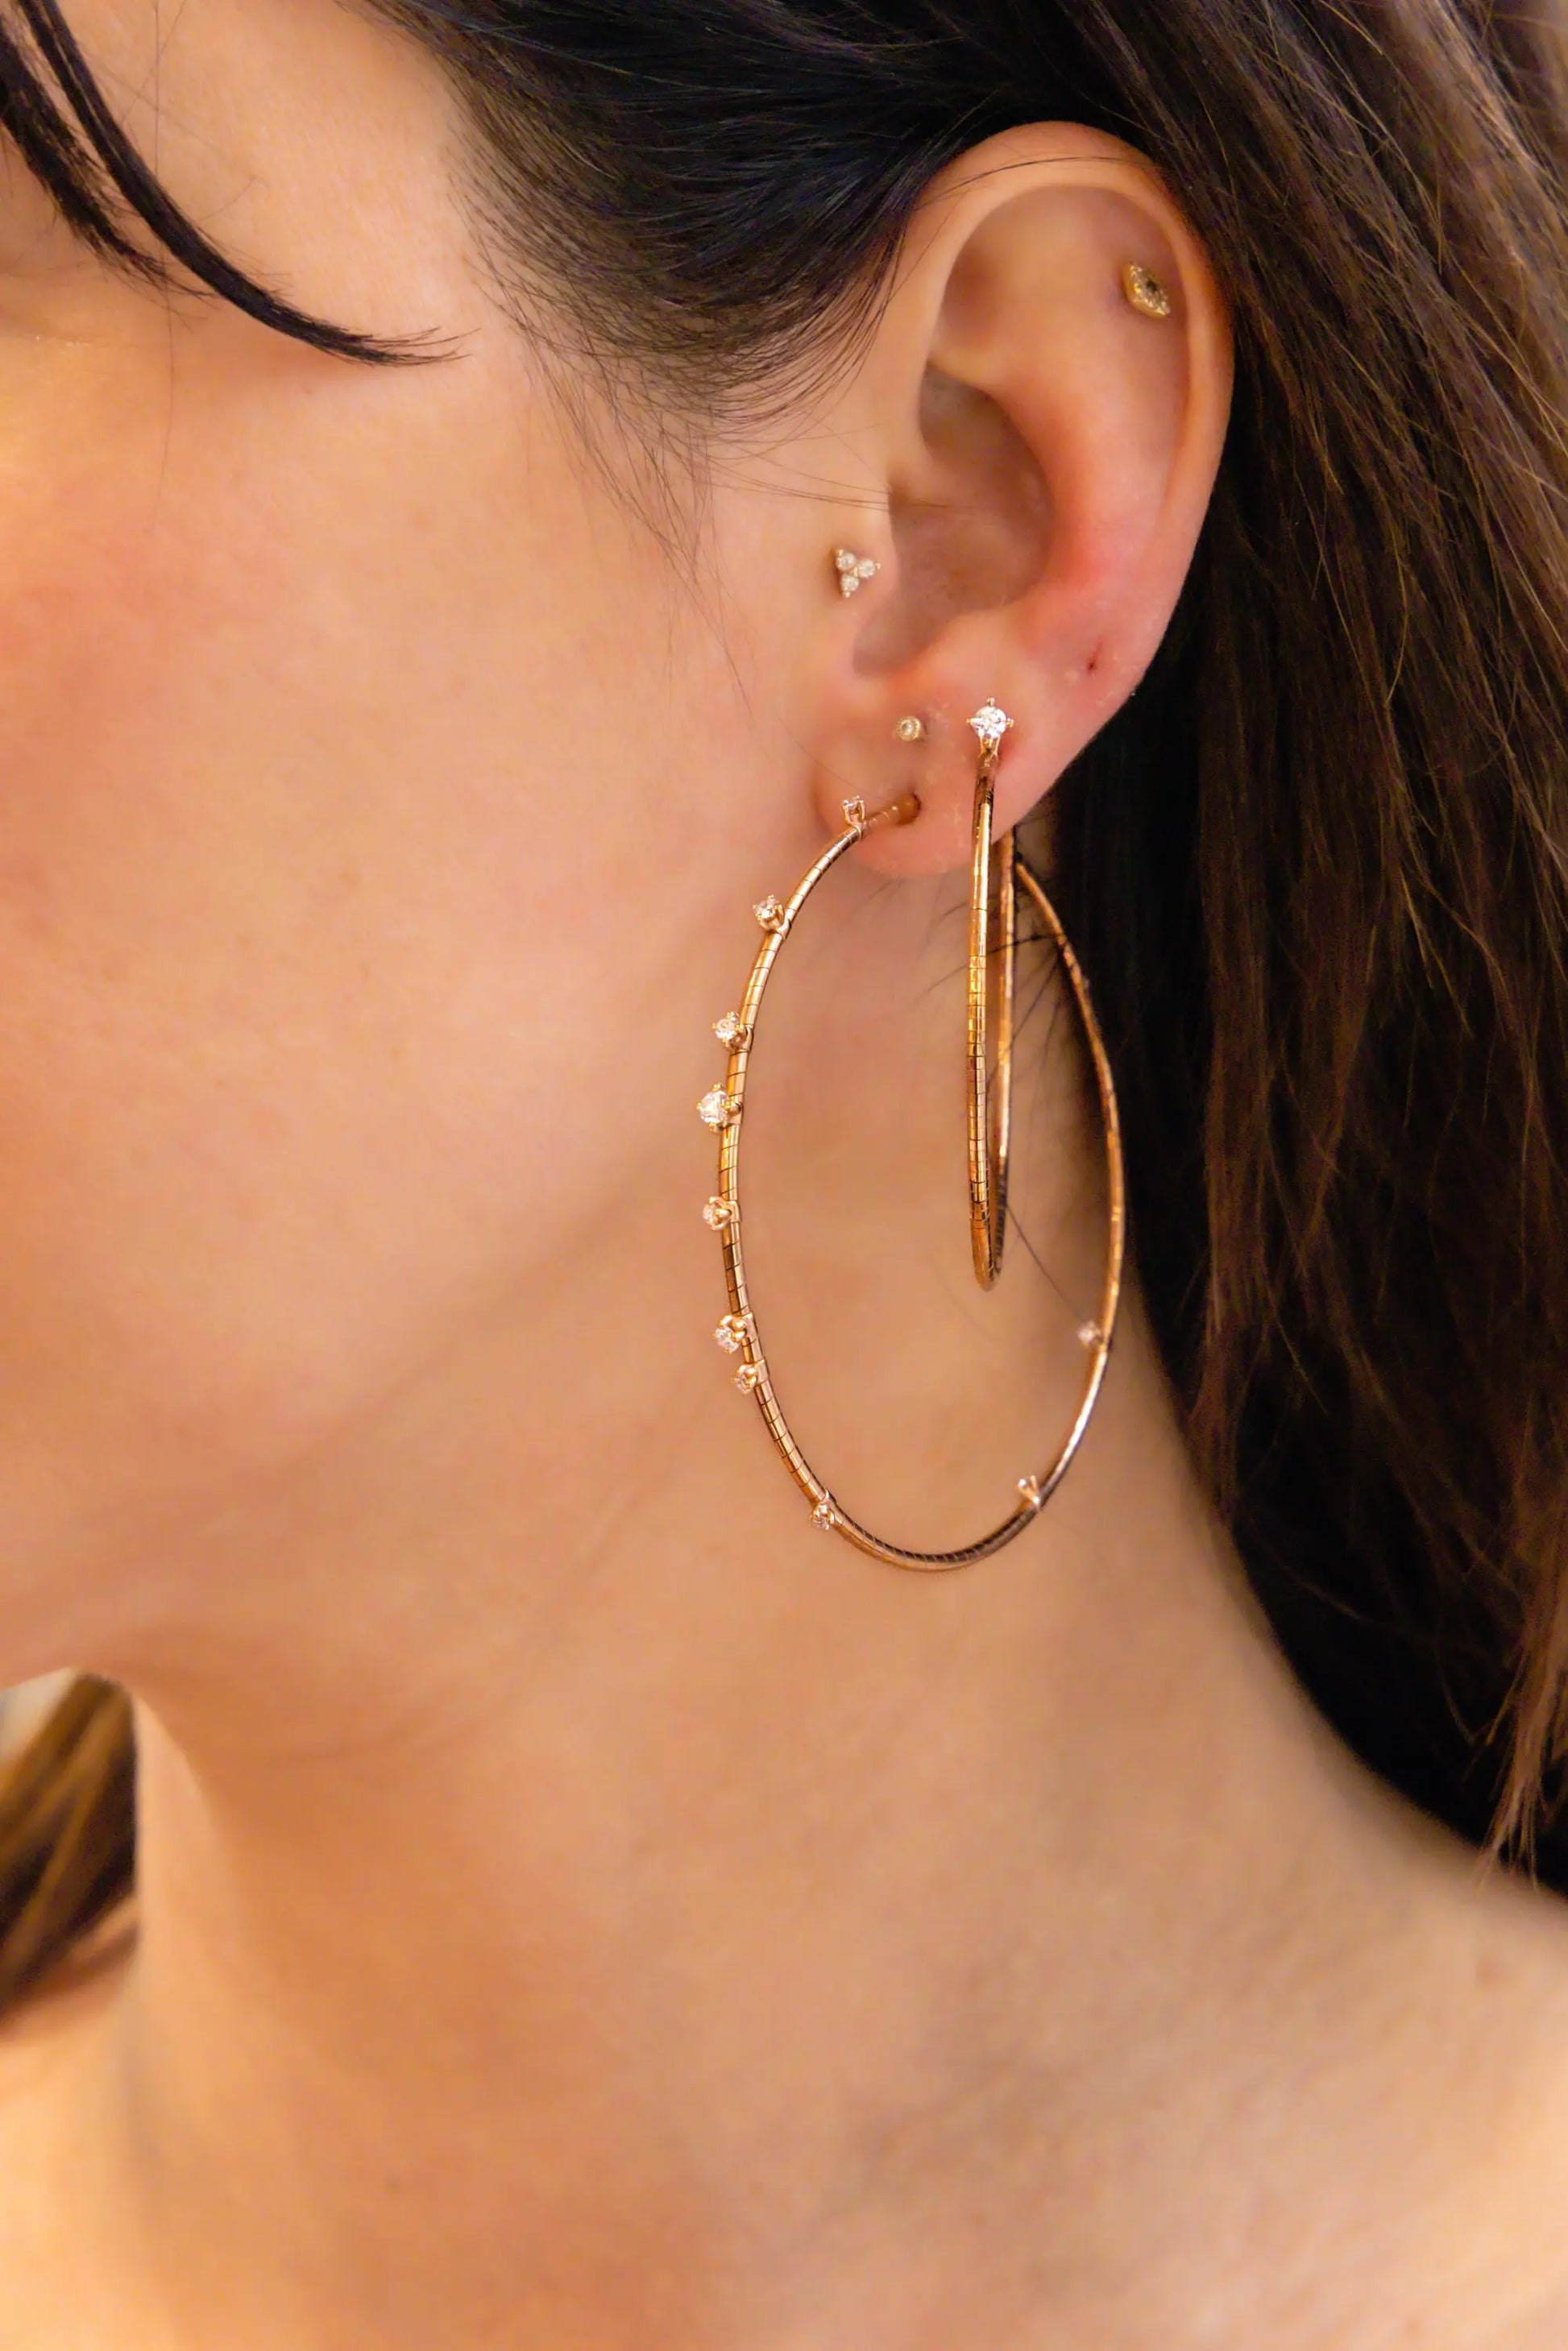 White Gold Hoop Earrings - Squash Blossom Vail